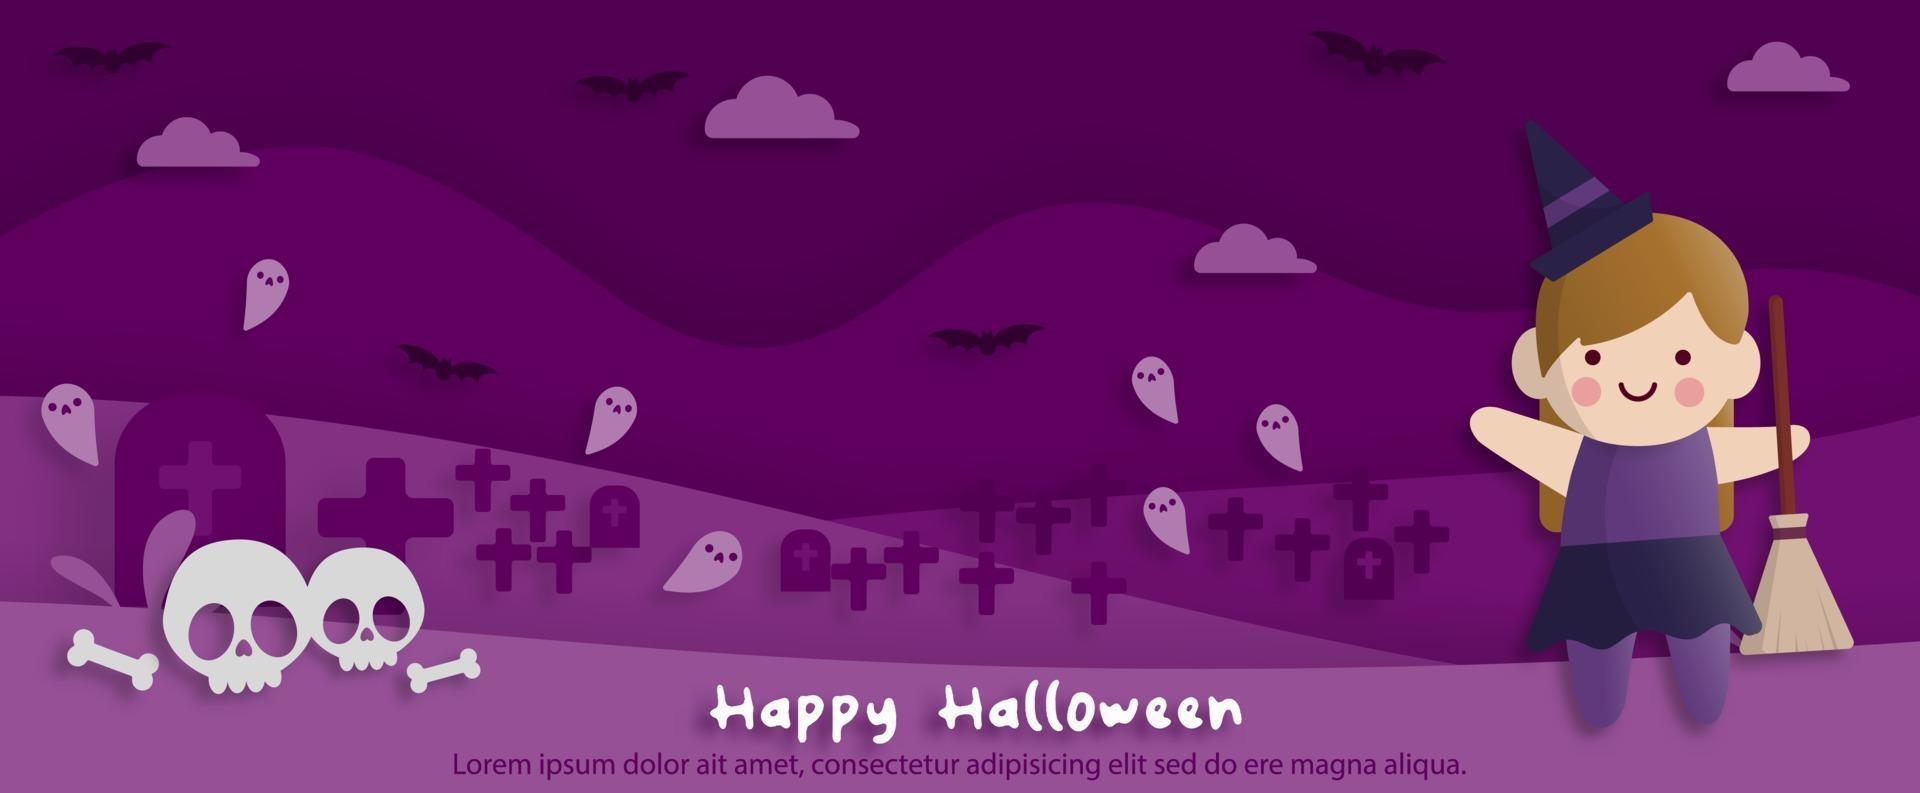 Happy Halloween party in paper art style vector